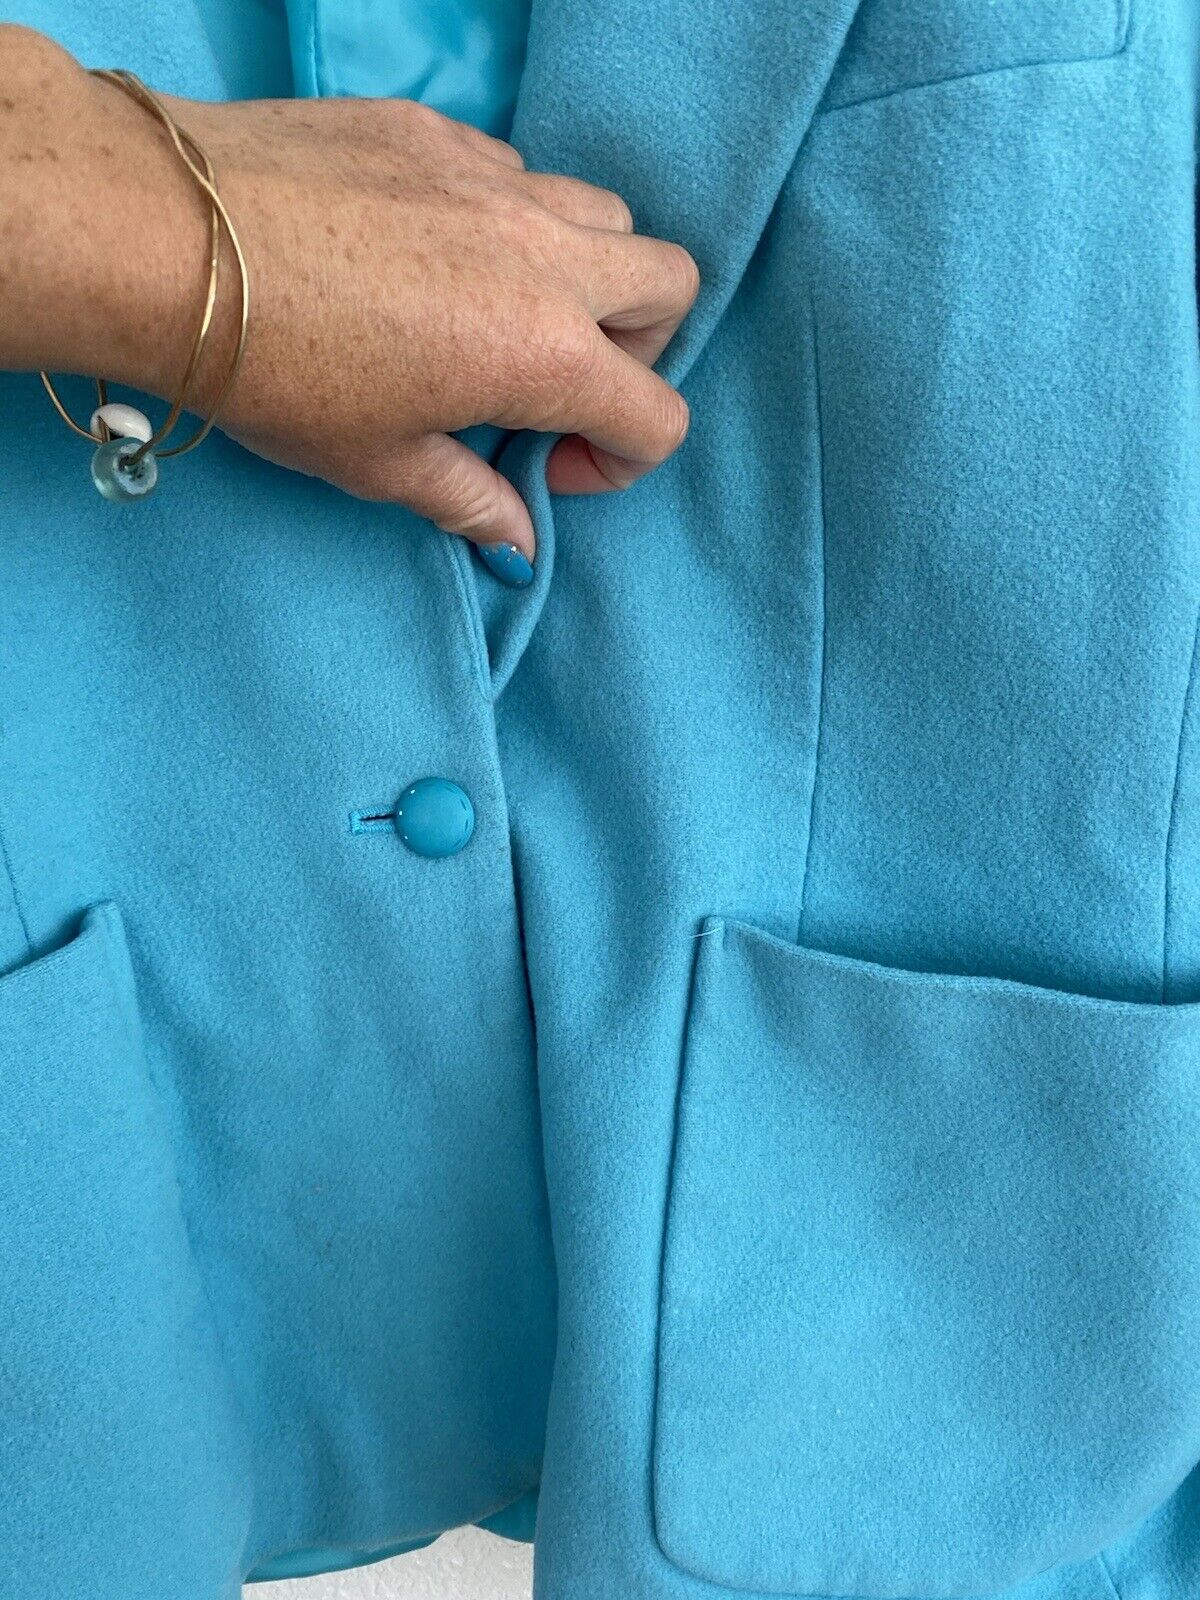 Teal Blue Wool Cashmere Blazer - Chadwicks - Women’s Large